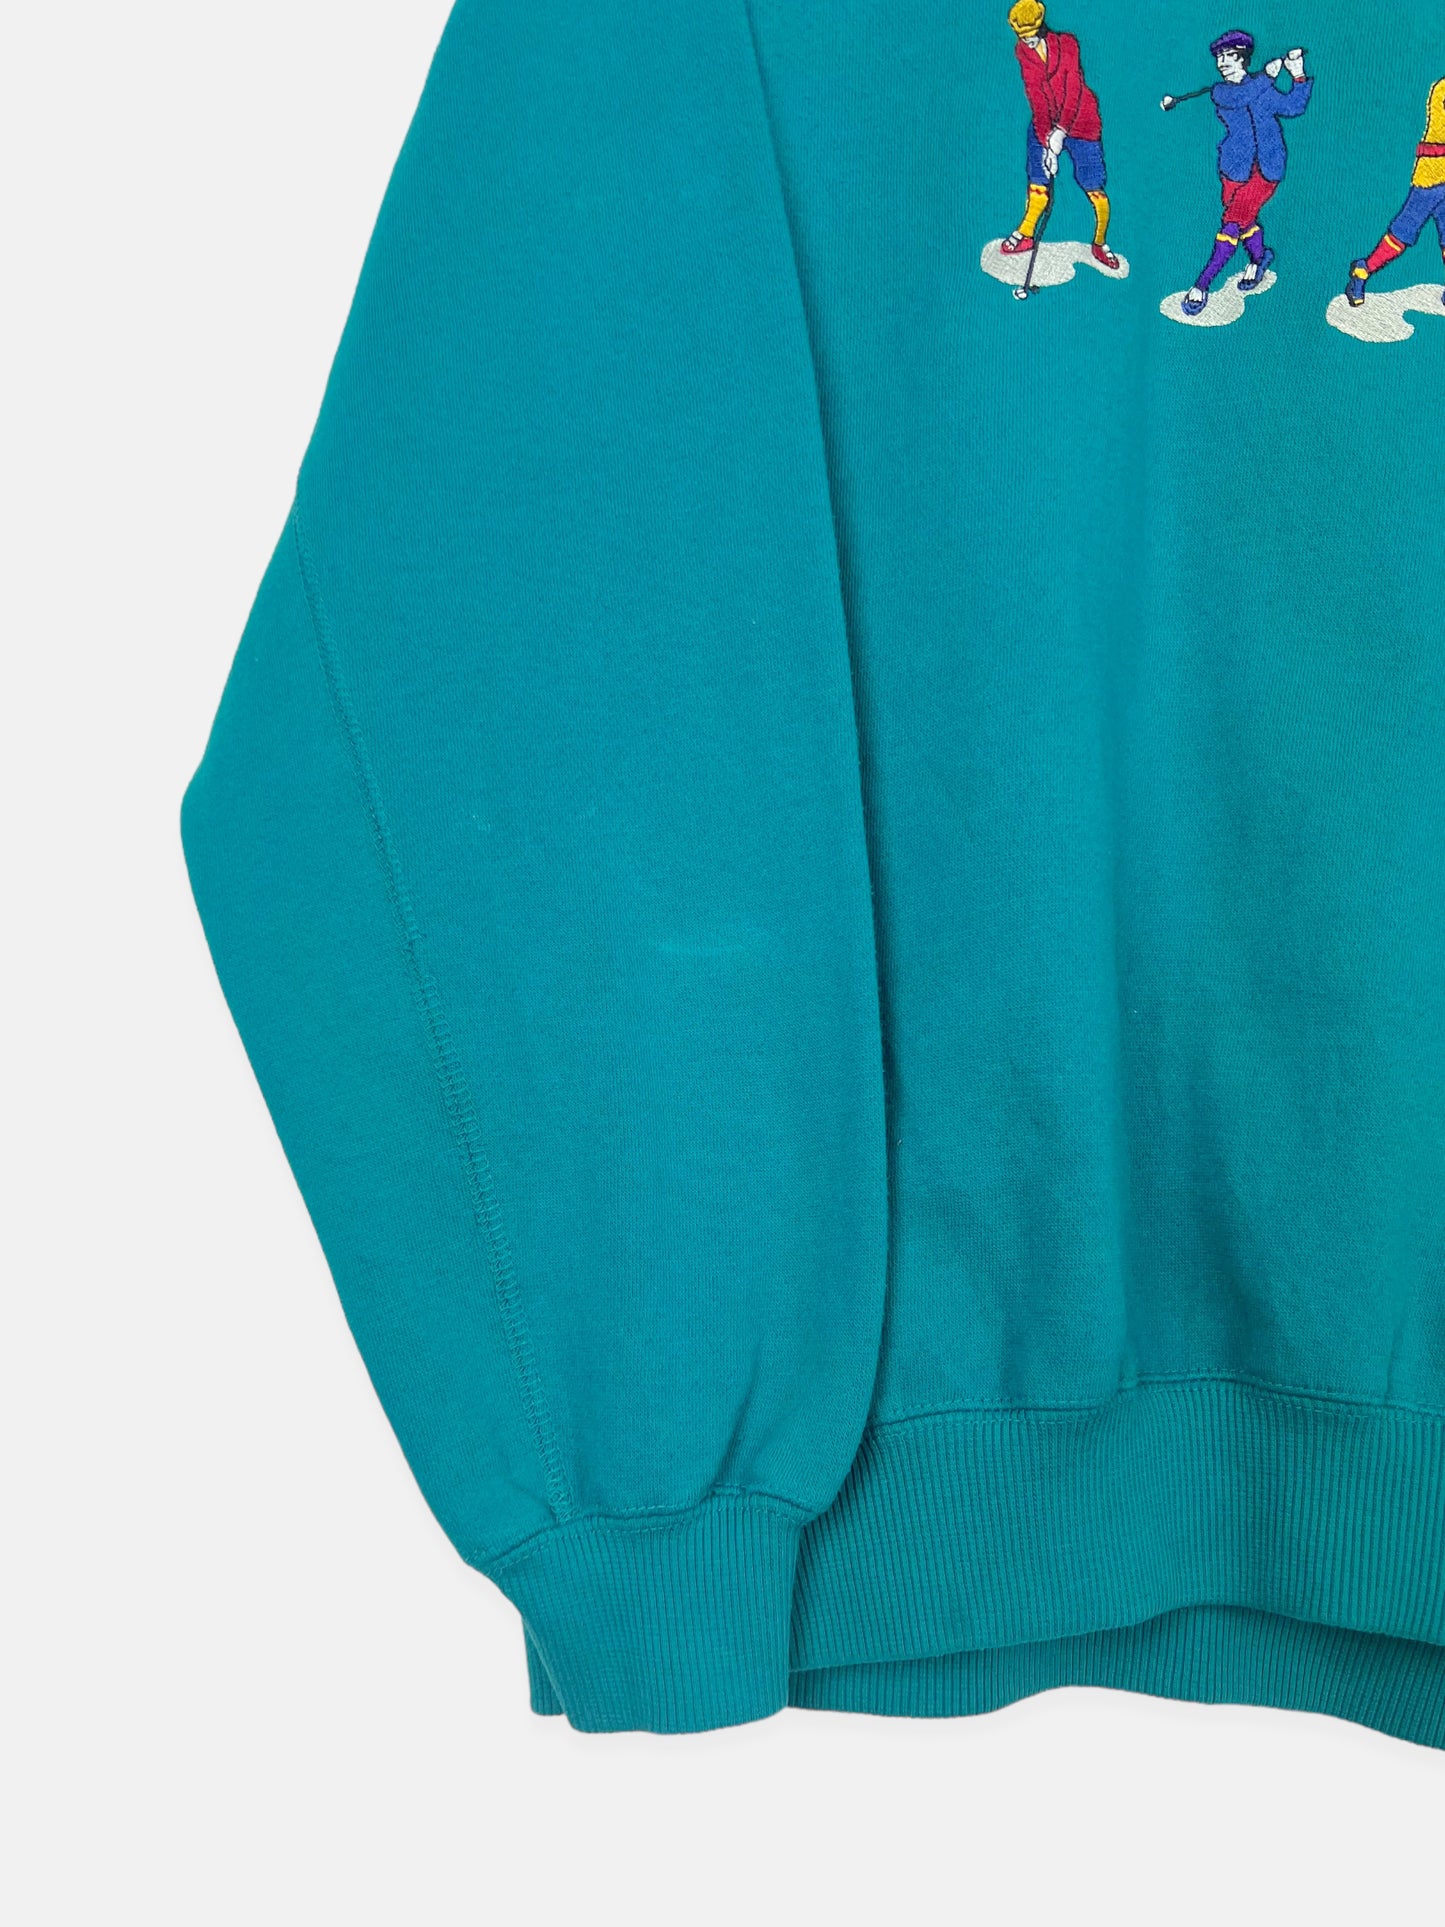 90's Golf Embroidered Vintage Sweatshirt Size 12